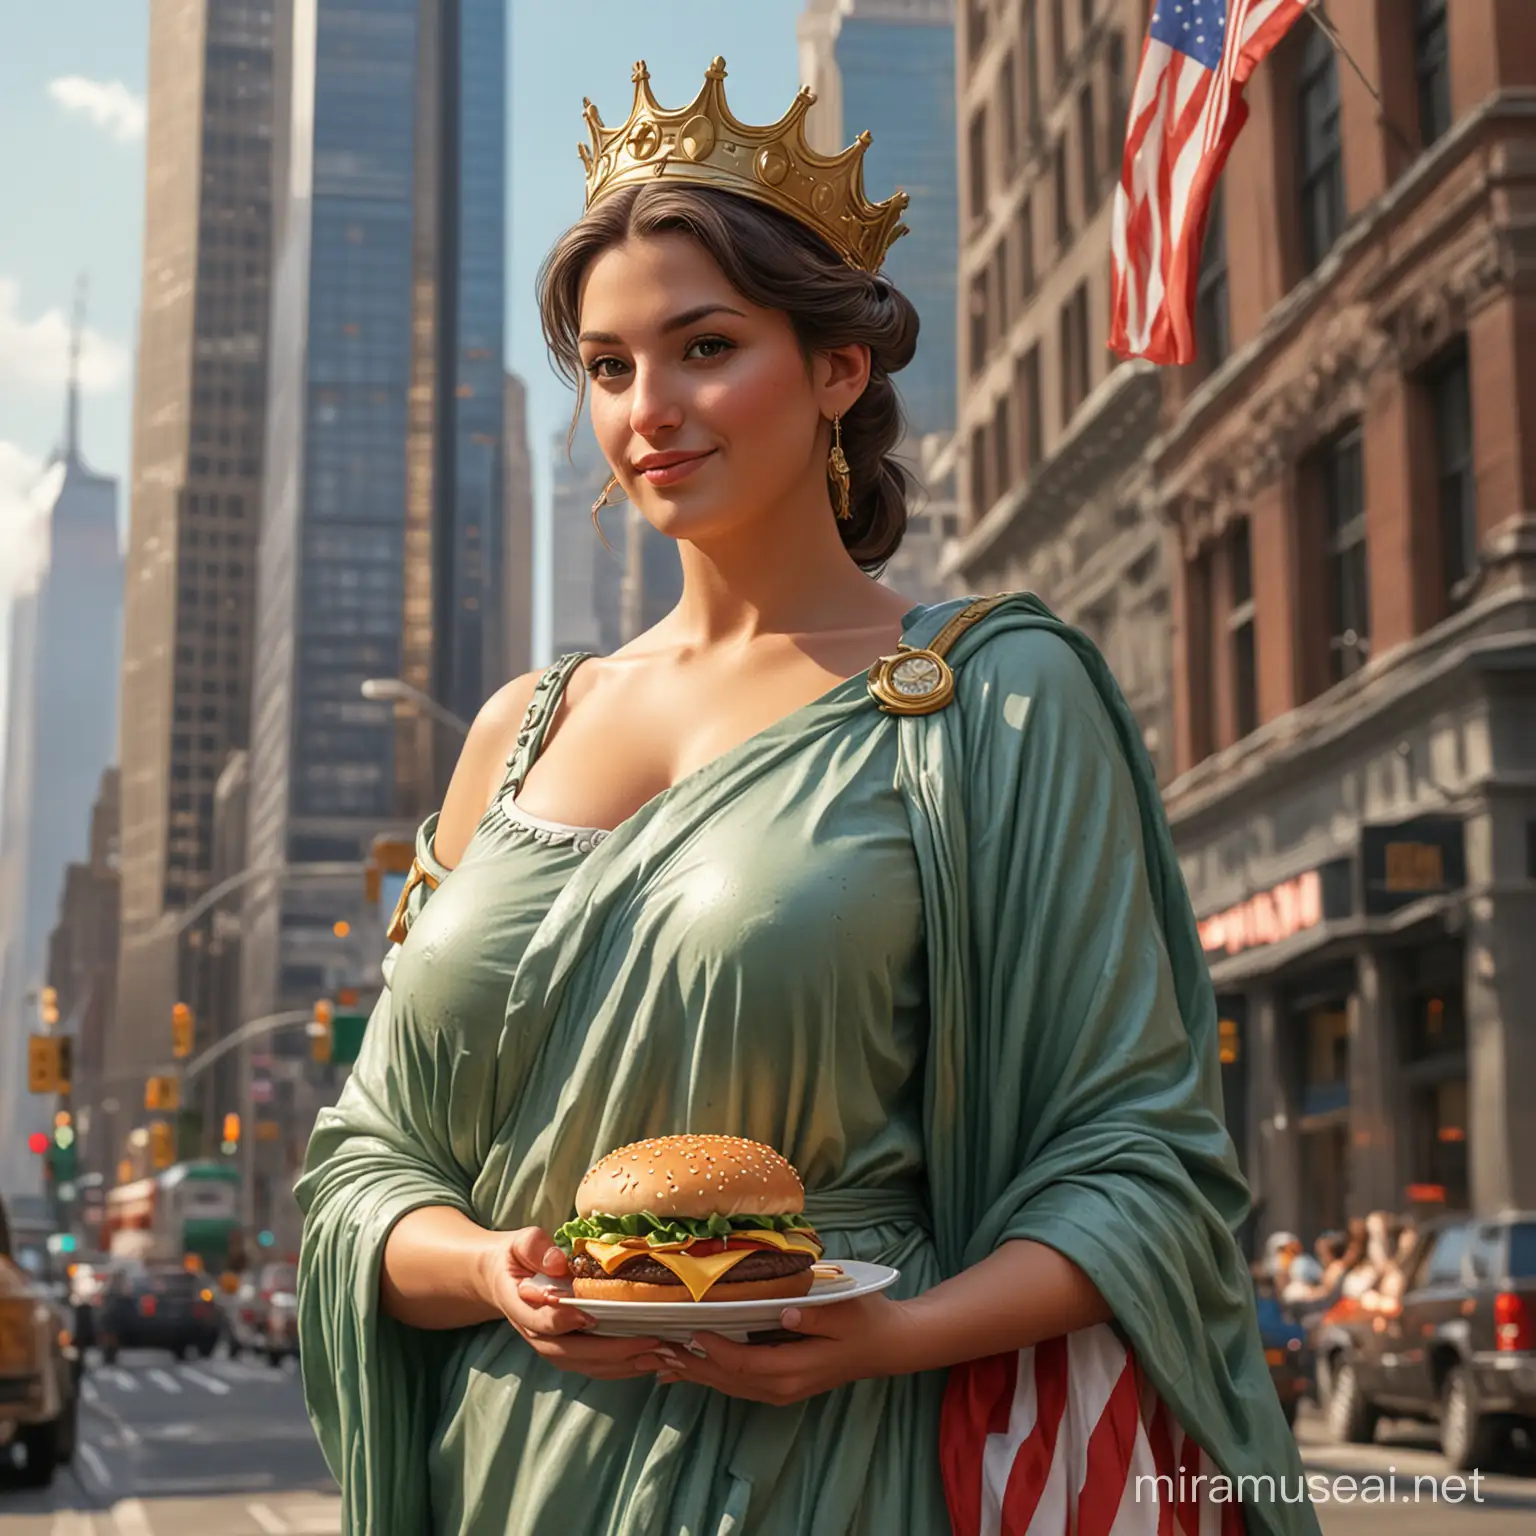 Indulgent Statue of Liberty Enjoying a Delicious Hamburger in Vibrant New York City Scene